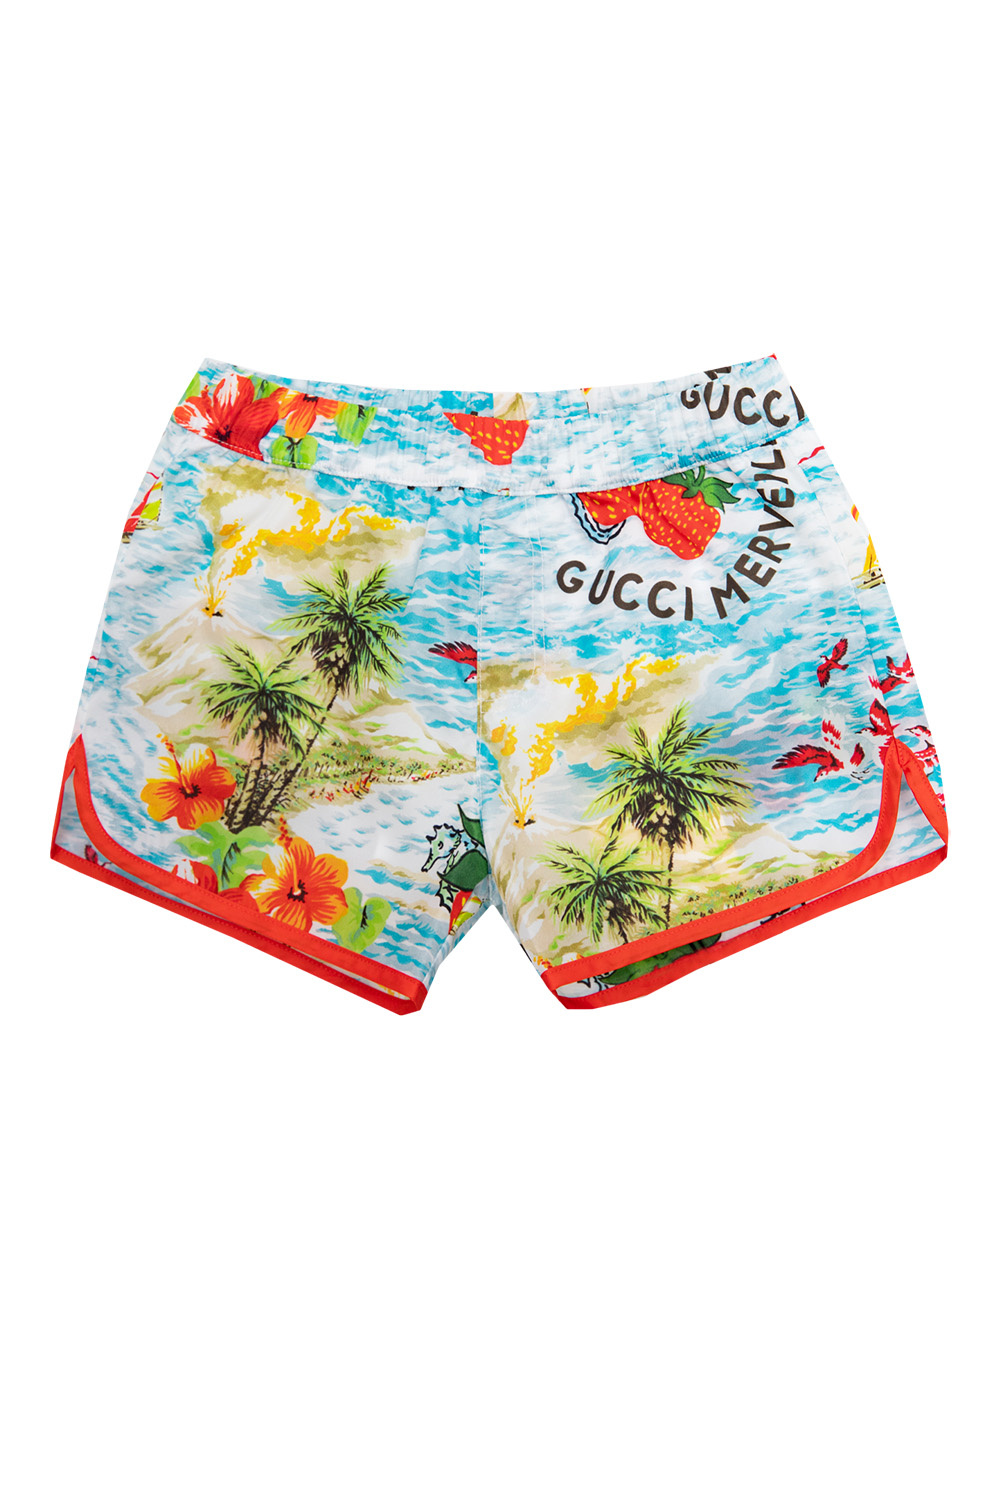 gucci ring Kids Swim shorts